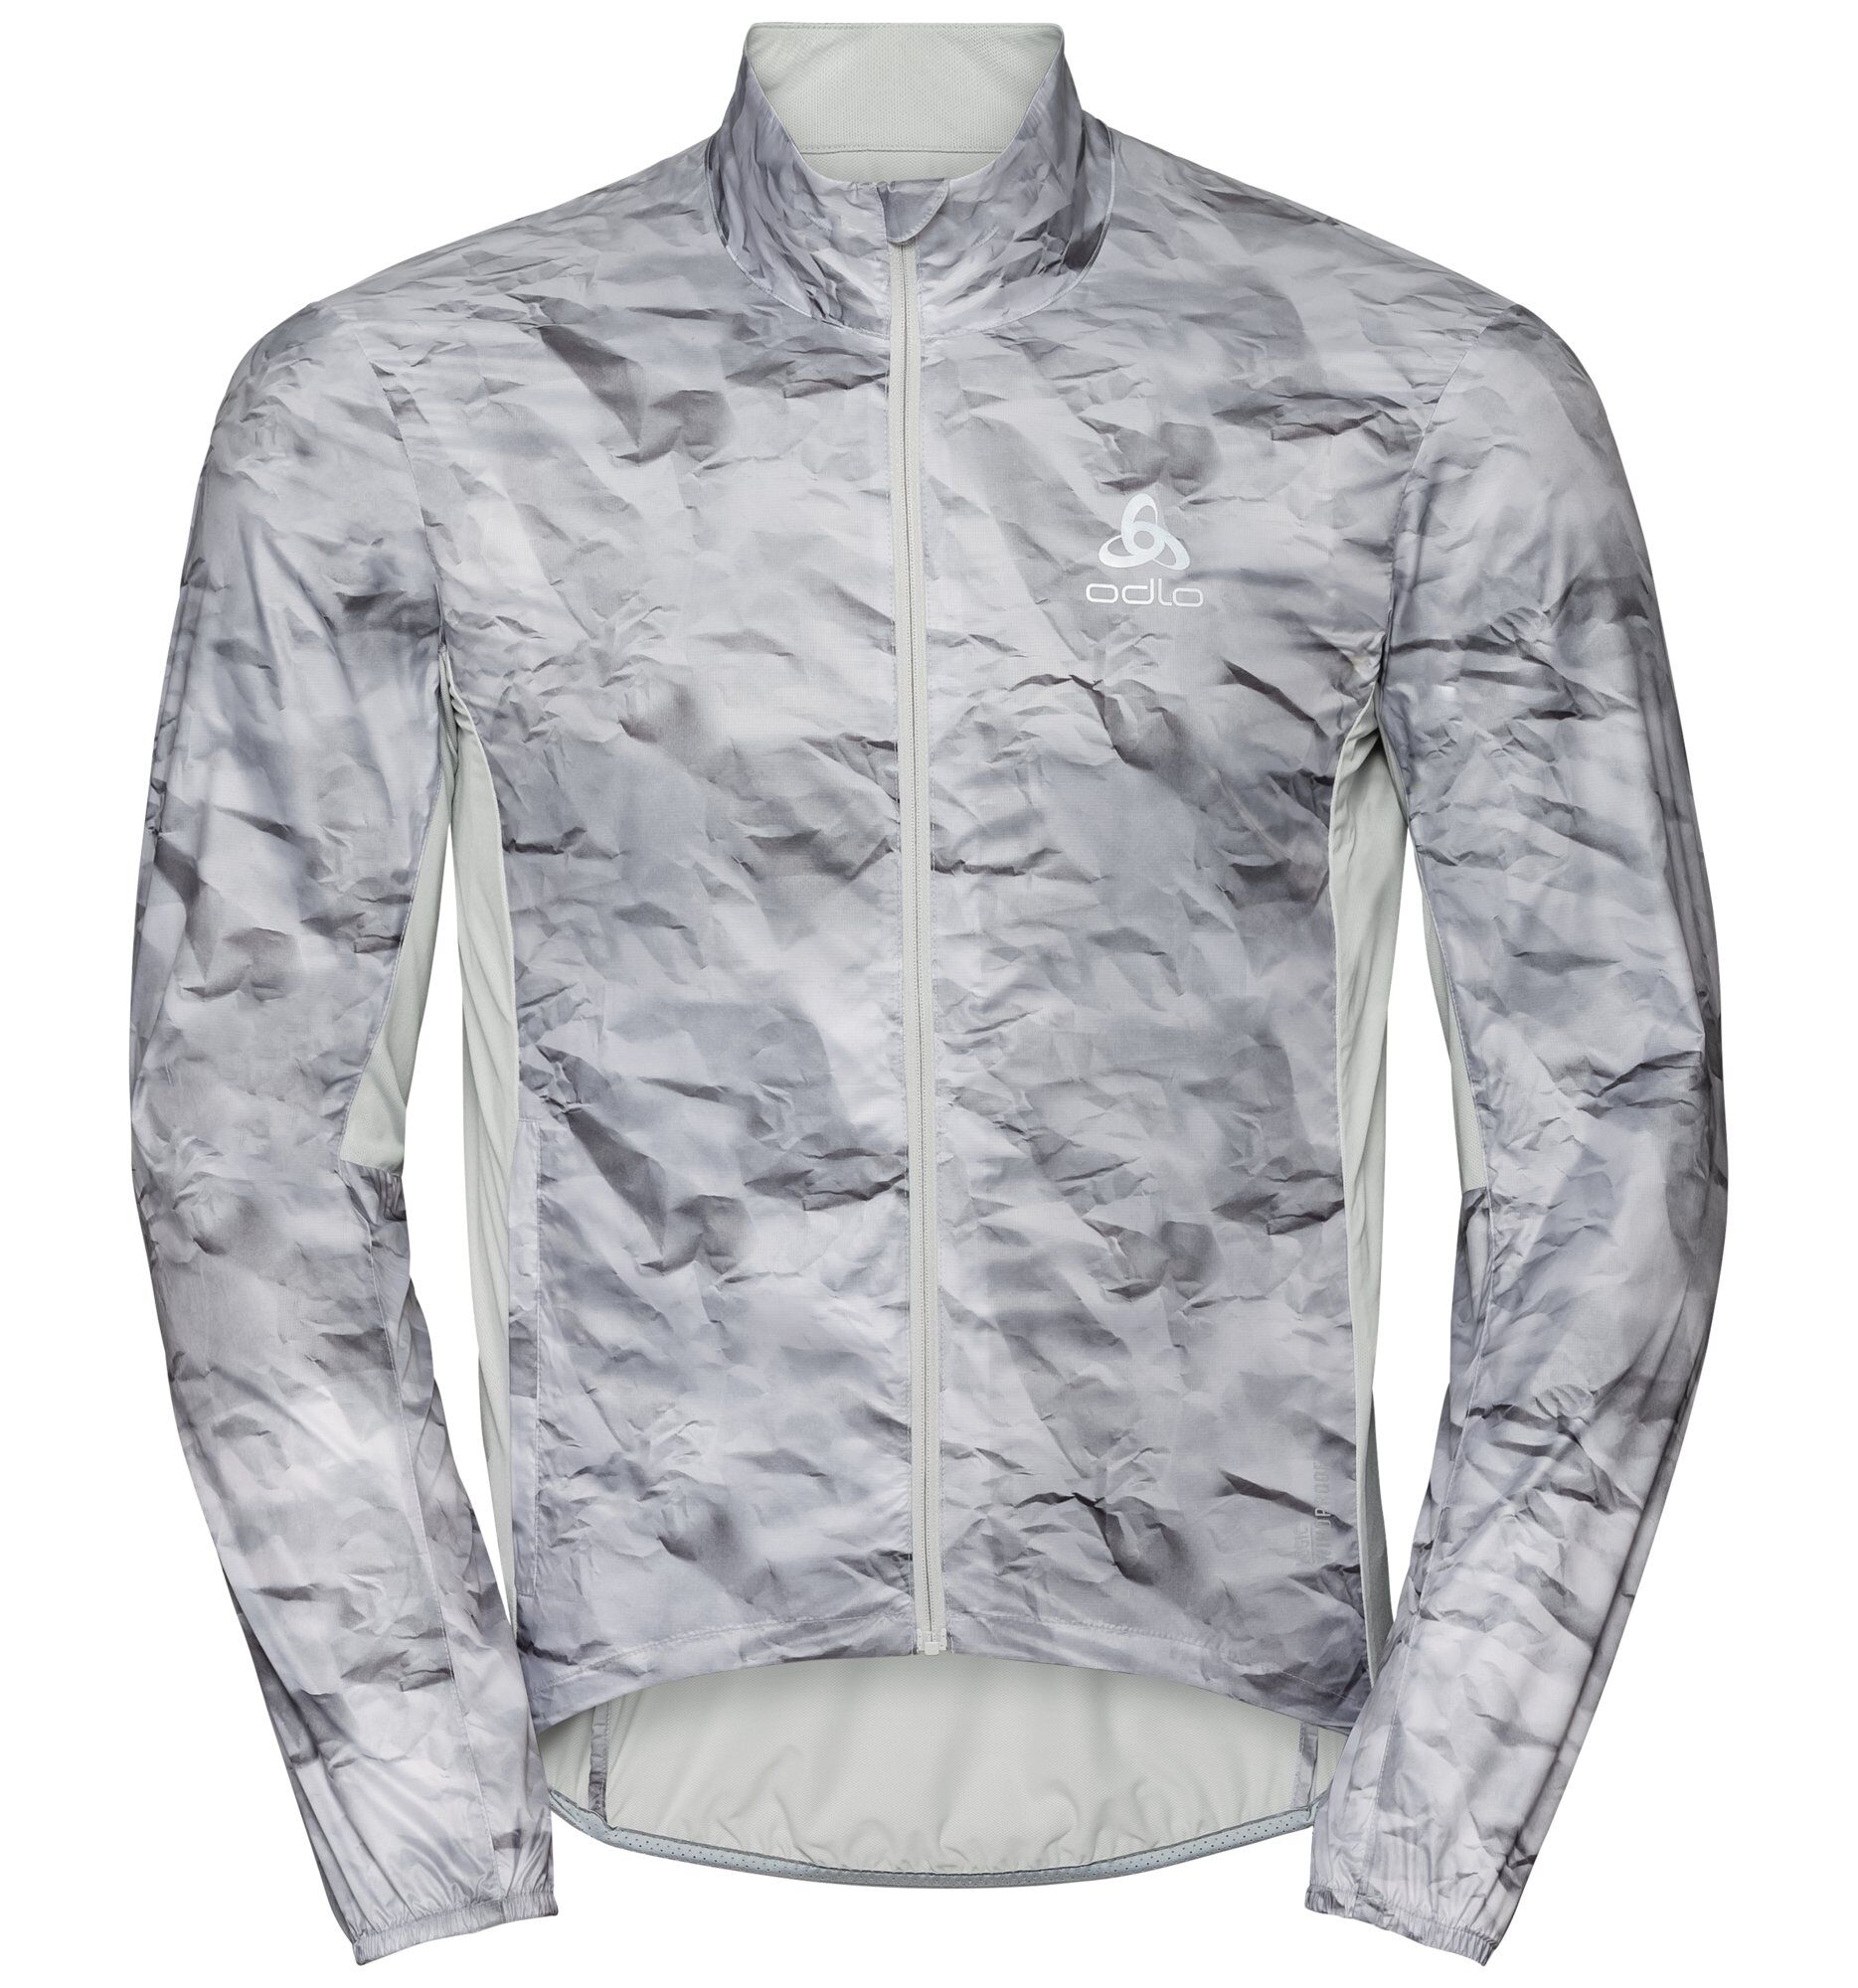 Odlo - Jacket Fujin - Running jacket - Men's